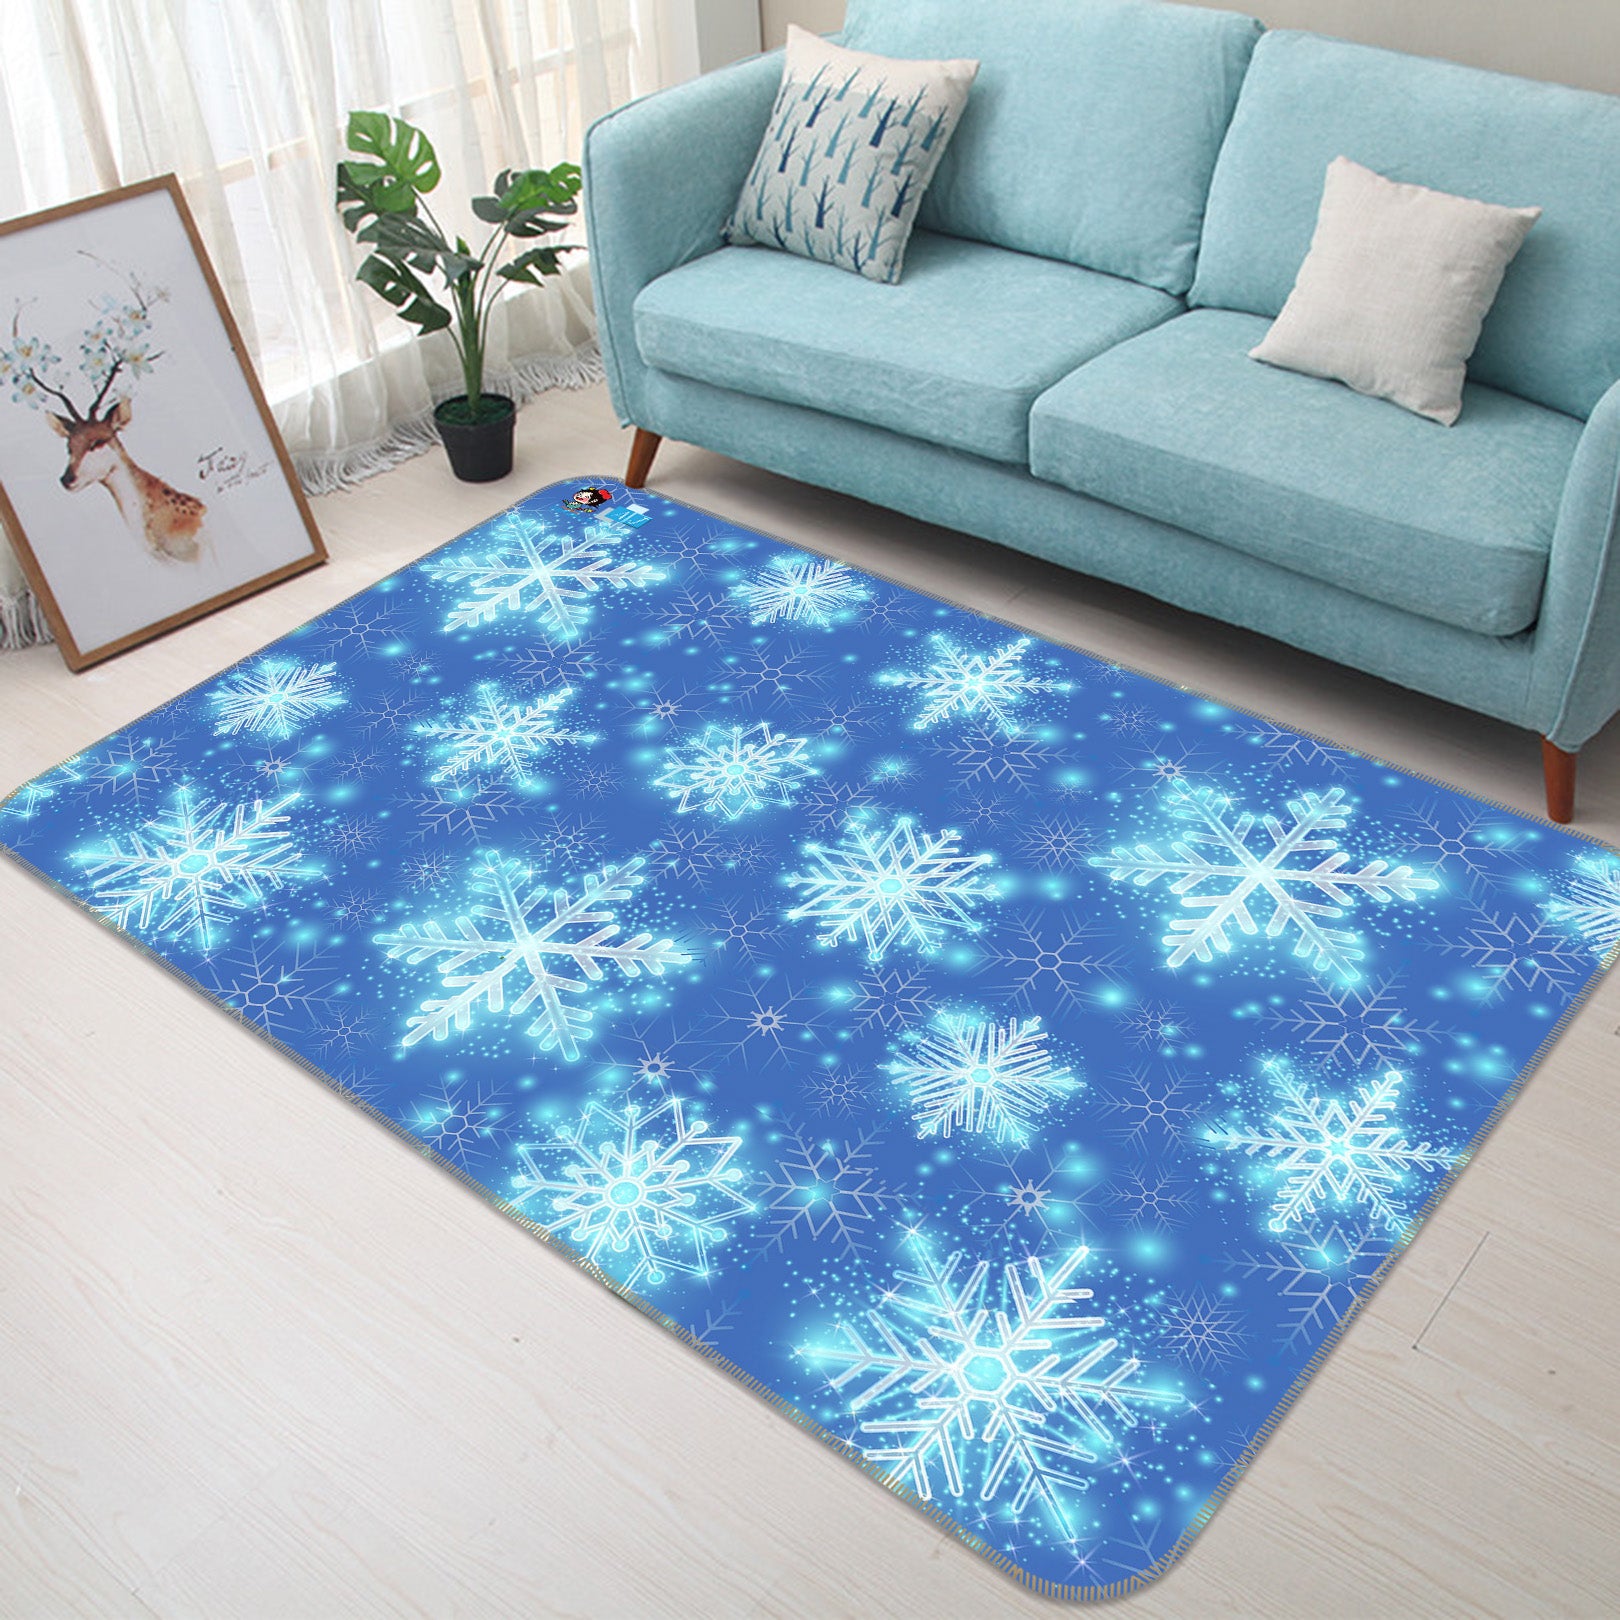 3D Blue Snowflakes 55054 Christmas Non Slip Rug Mat Xmas